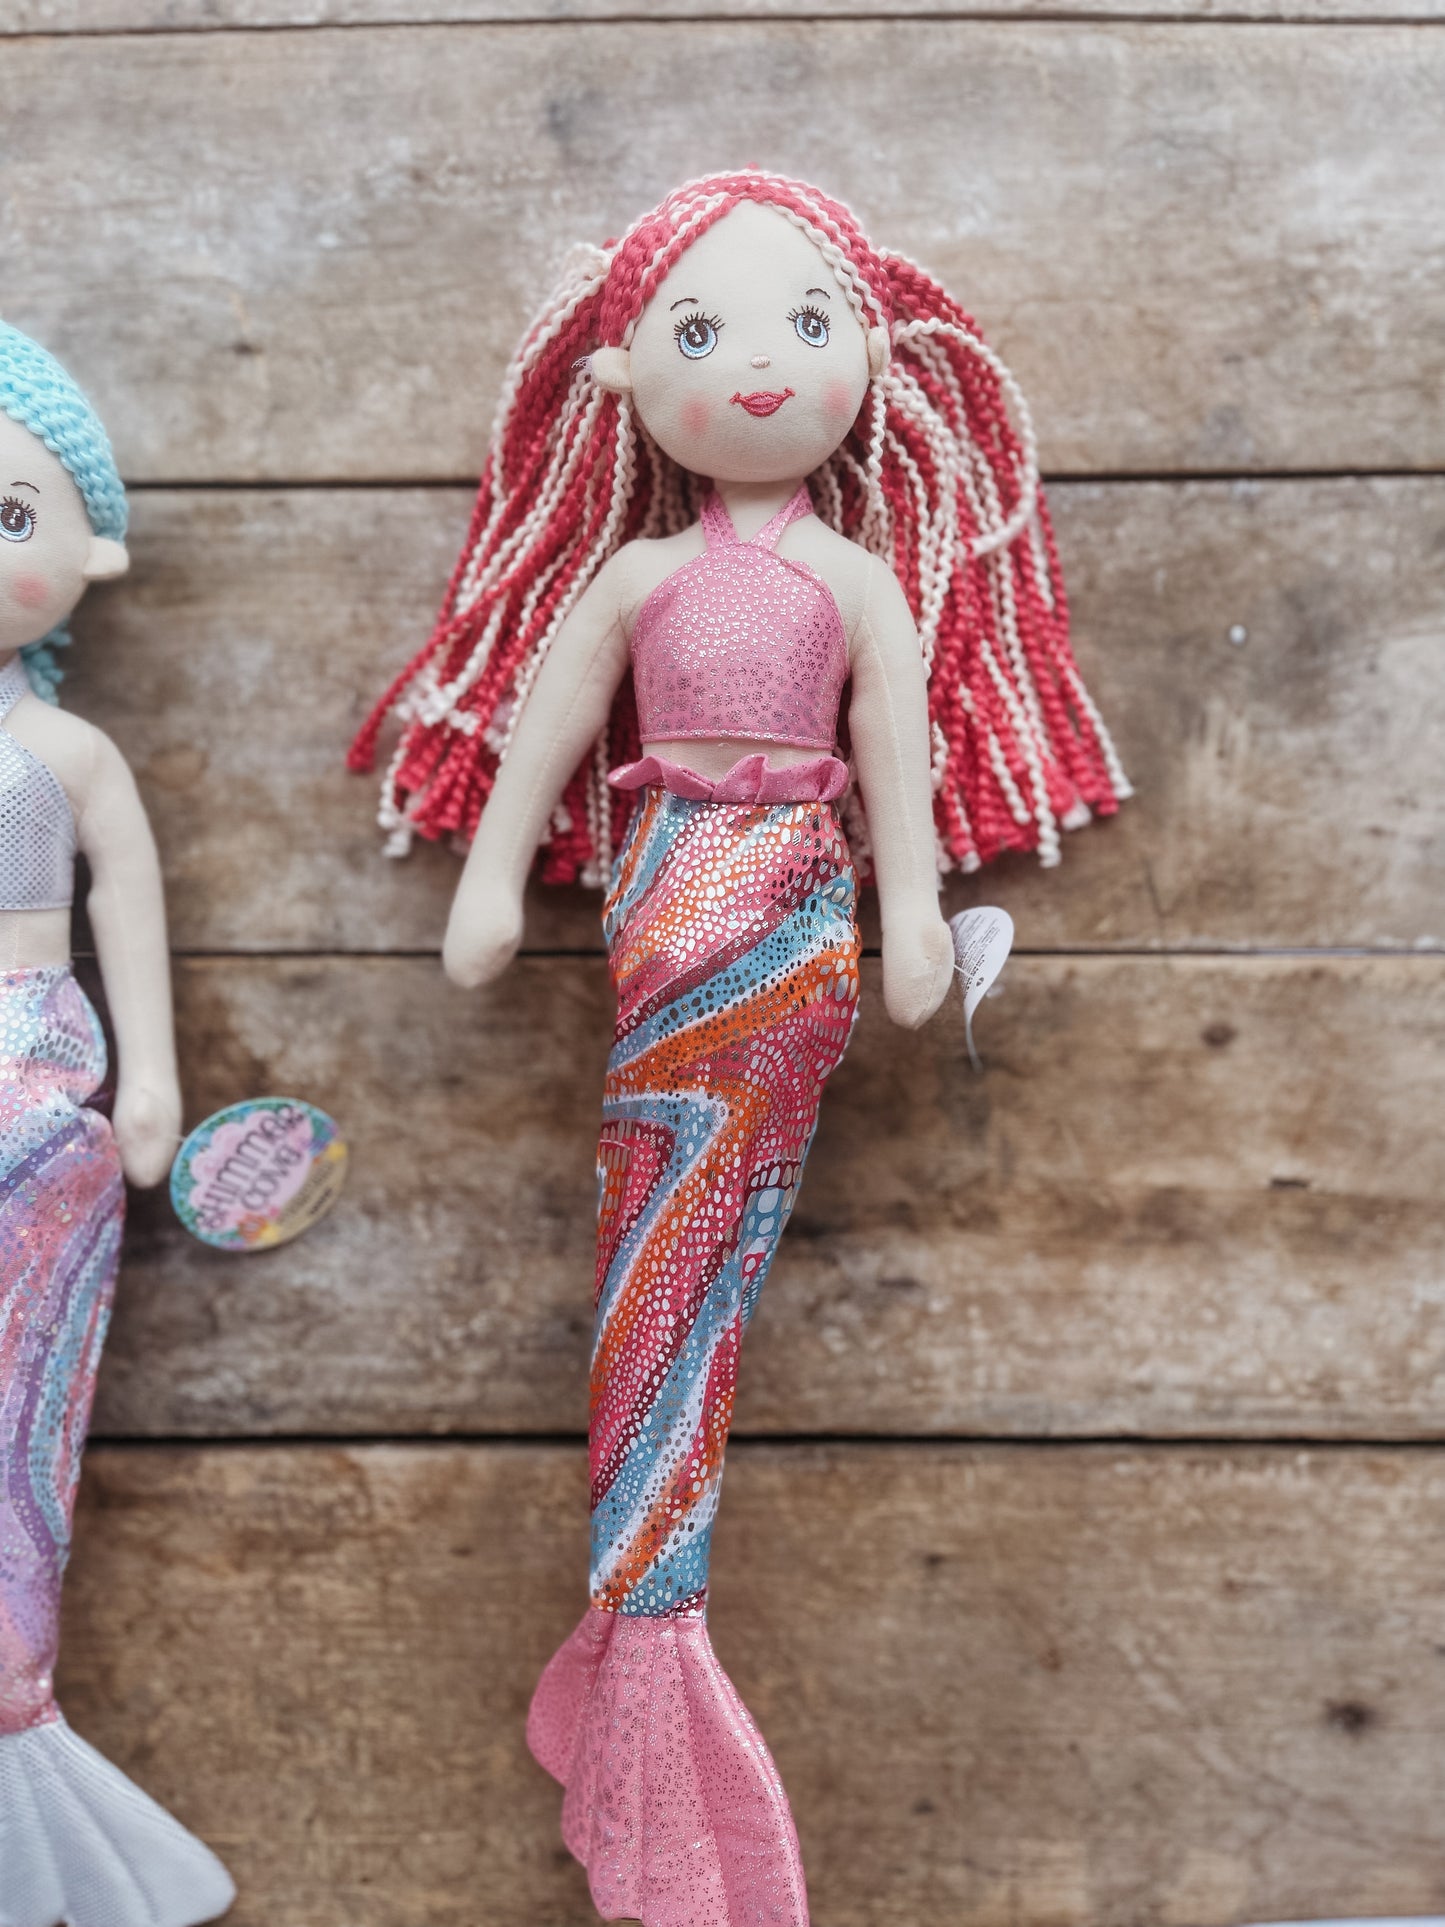 Shimmer Cove Mermaids